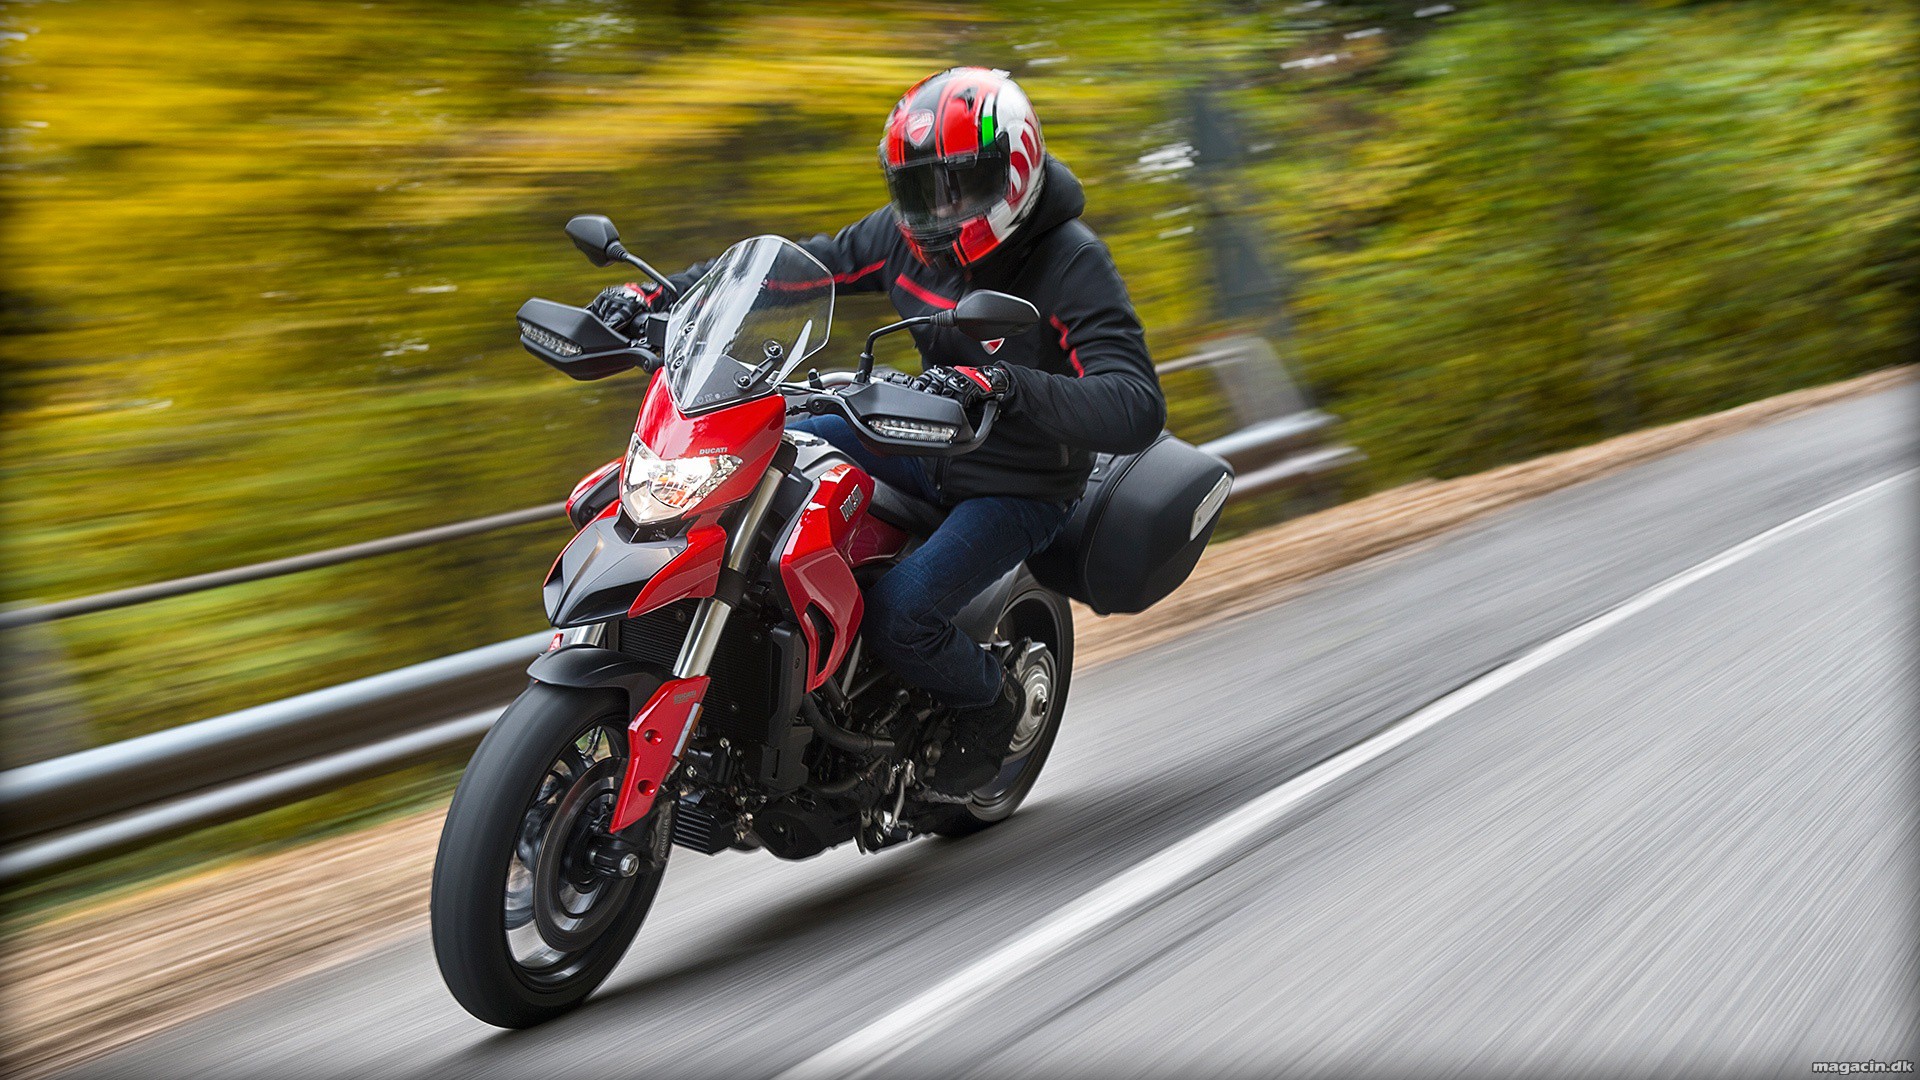 Test: 2016 Ducati Hyperstrada 939 – Rejsegilde i rødt